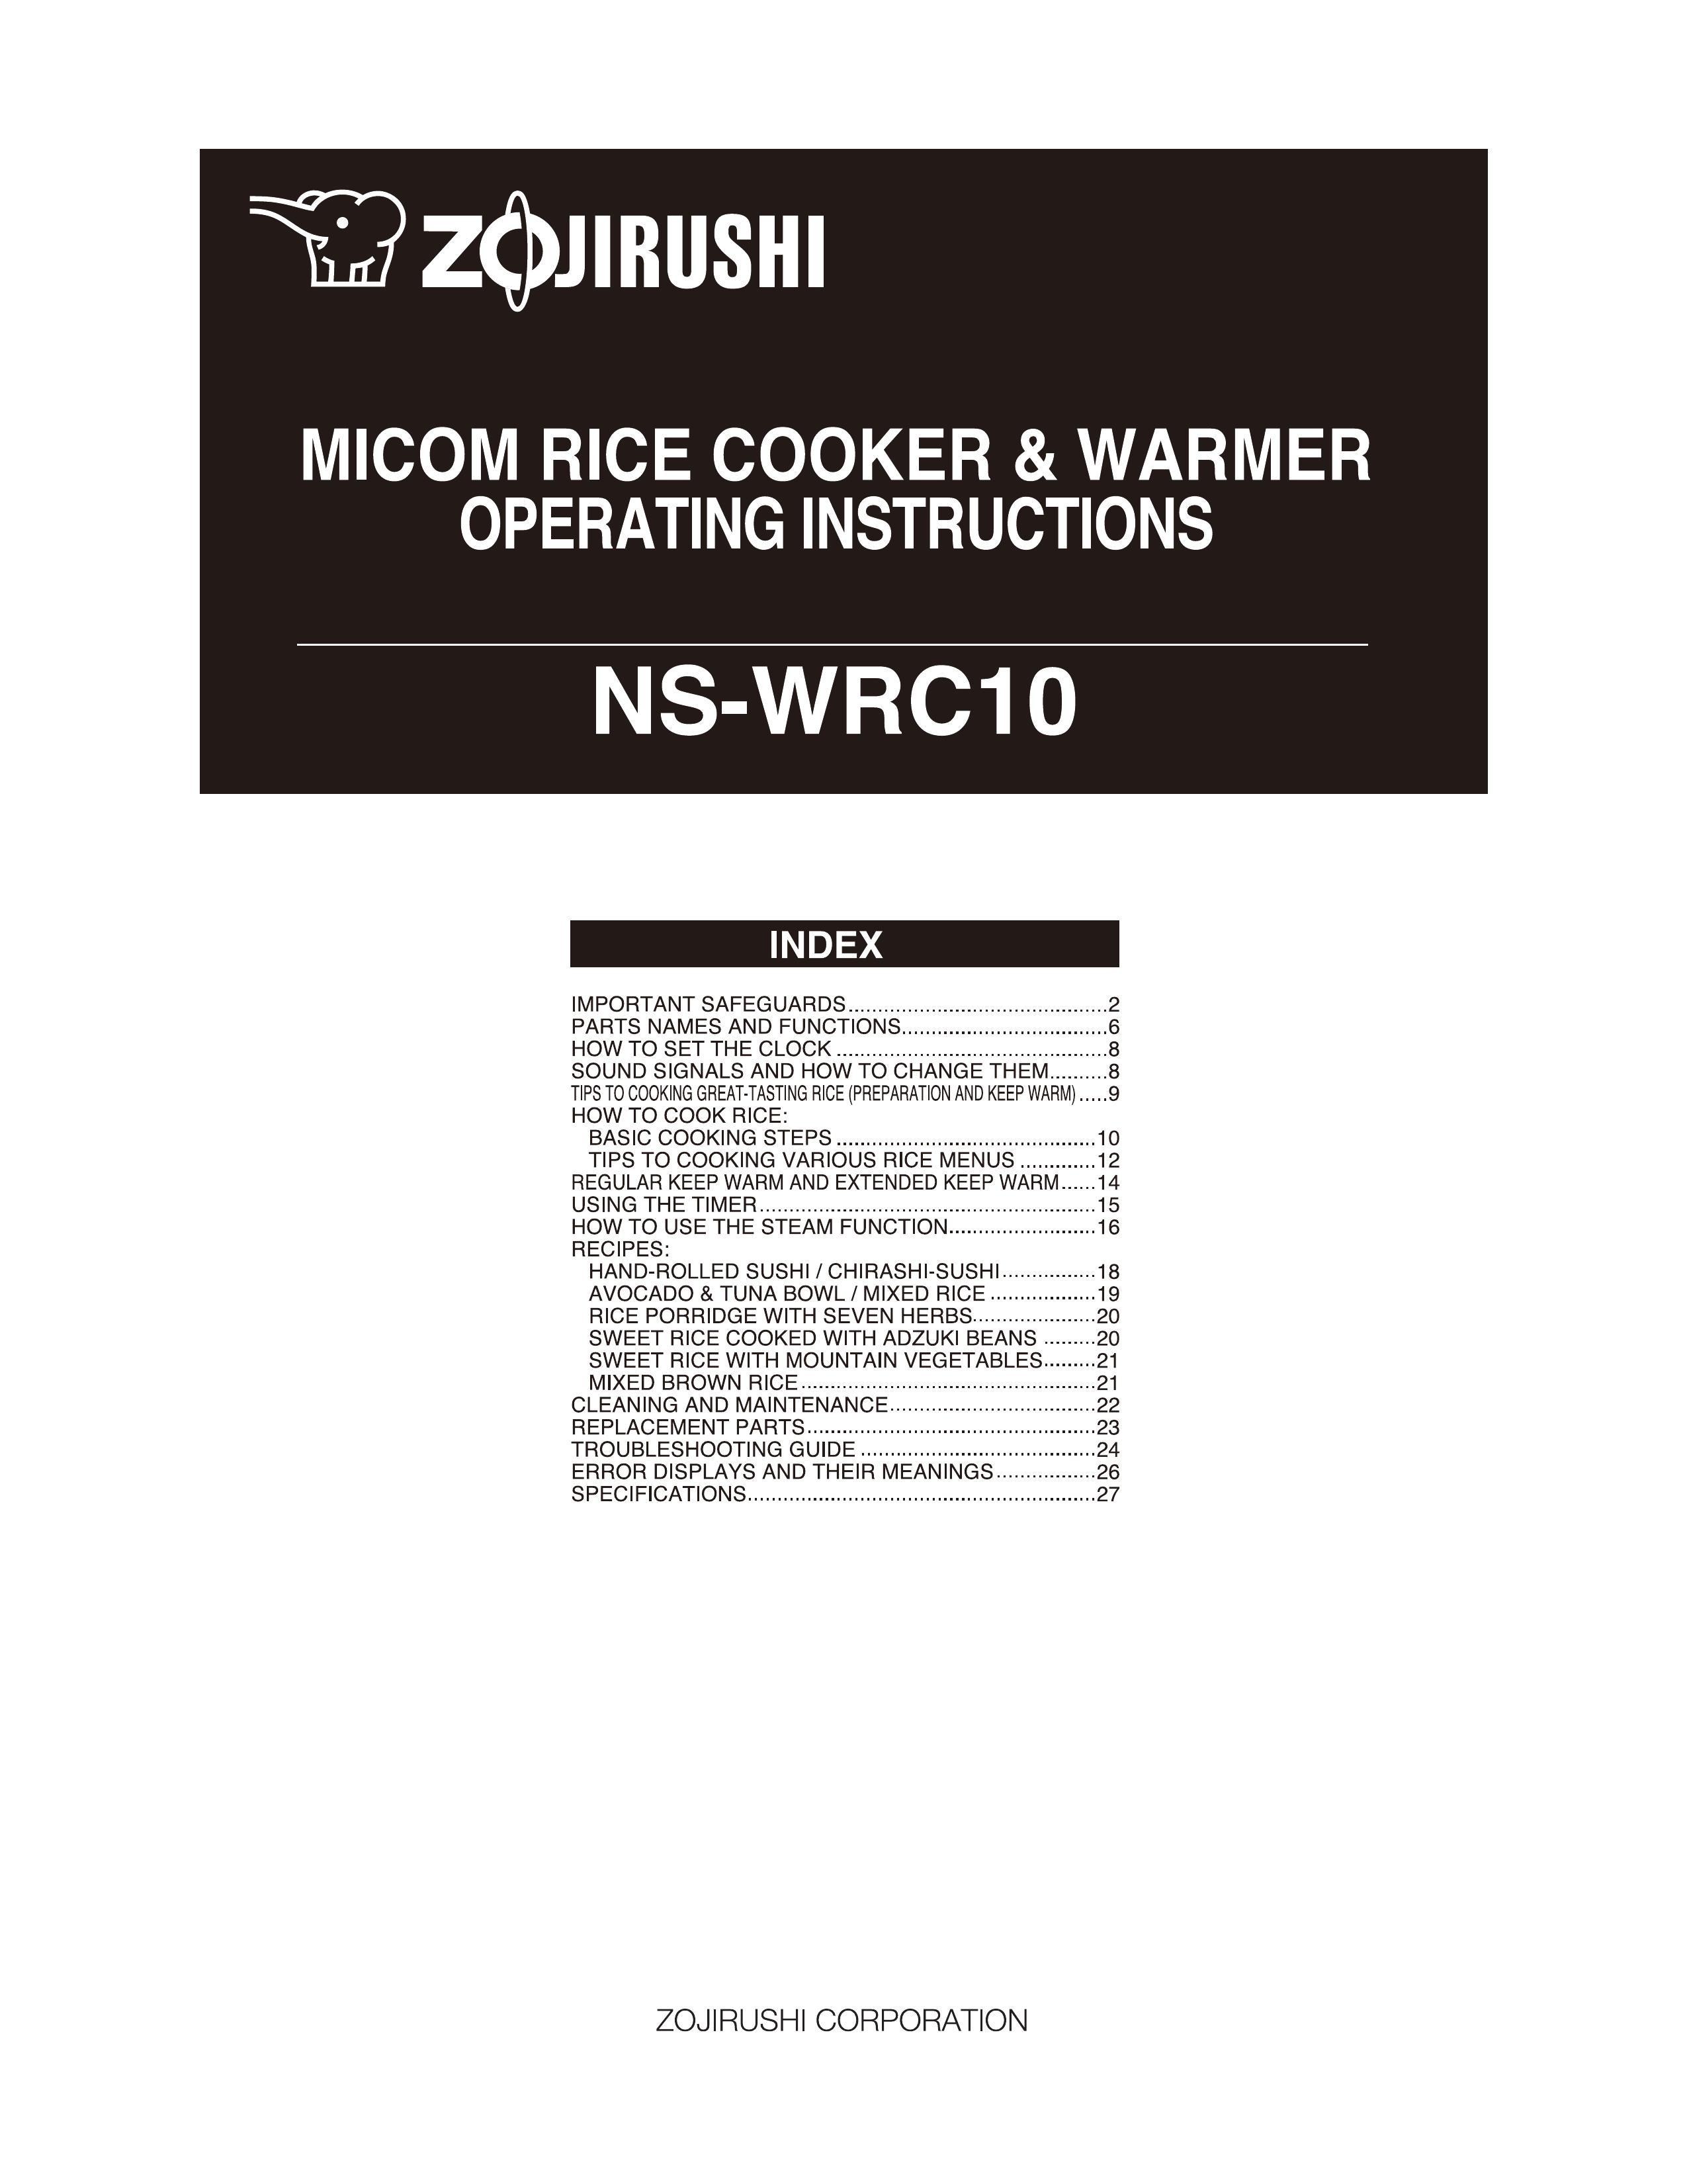 Zojirushi NS-WRC10 Rice Cooker User Manual